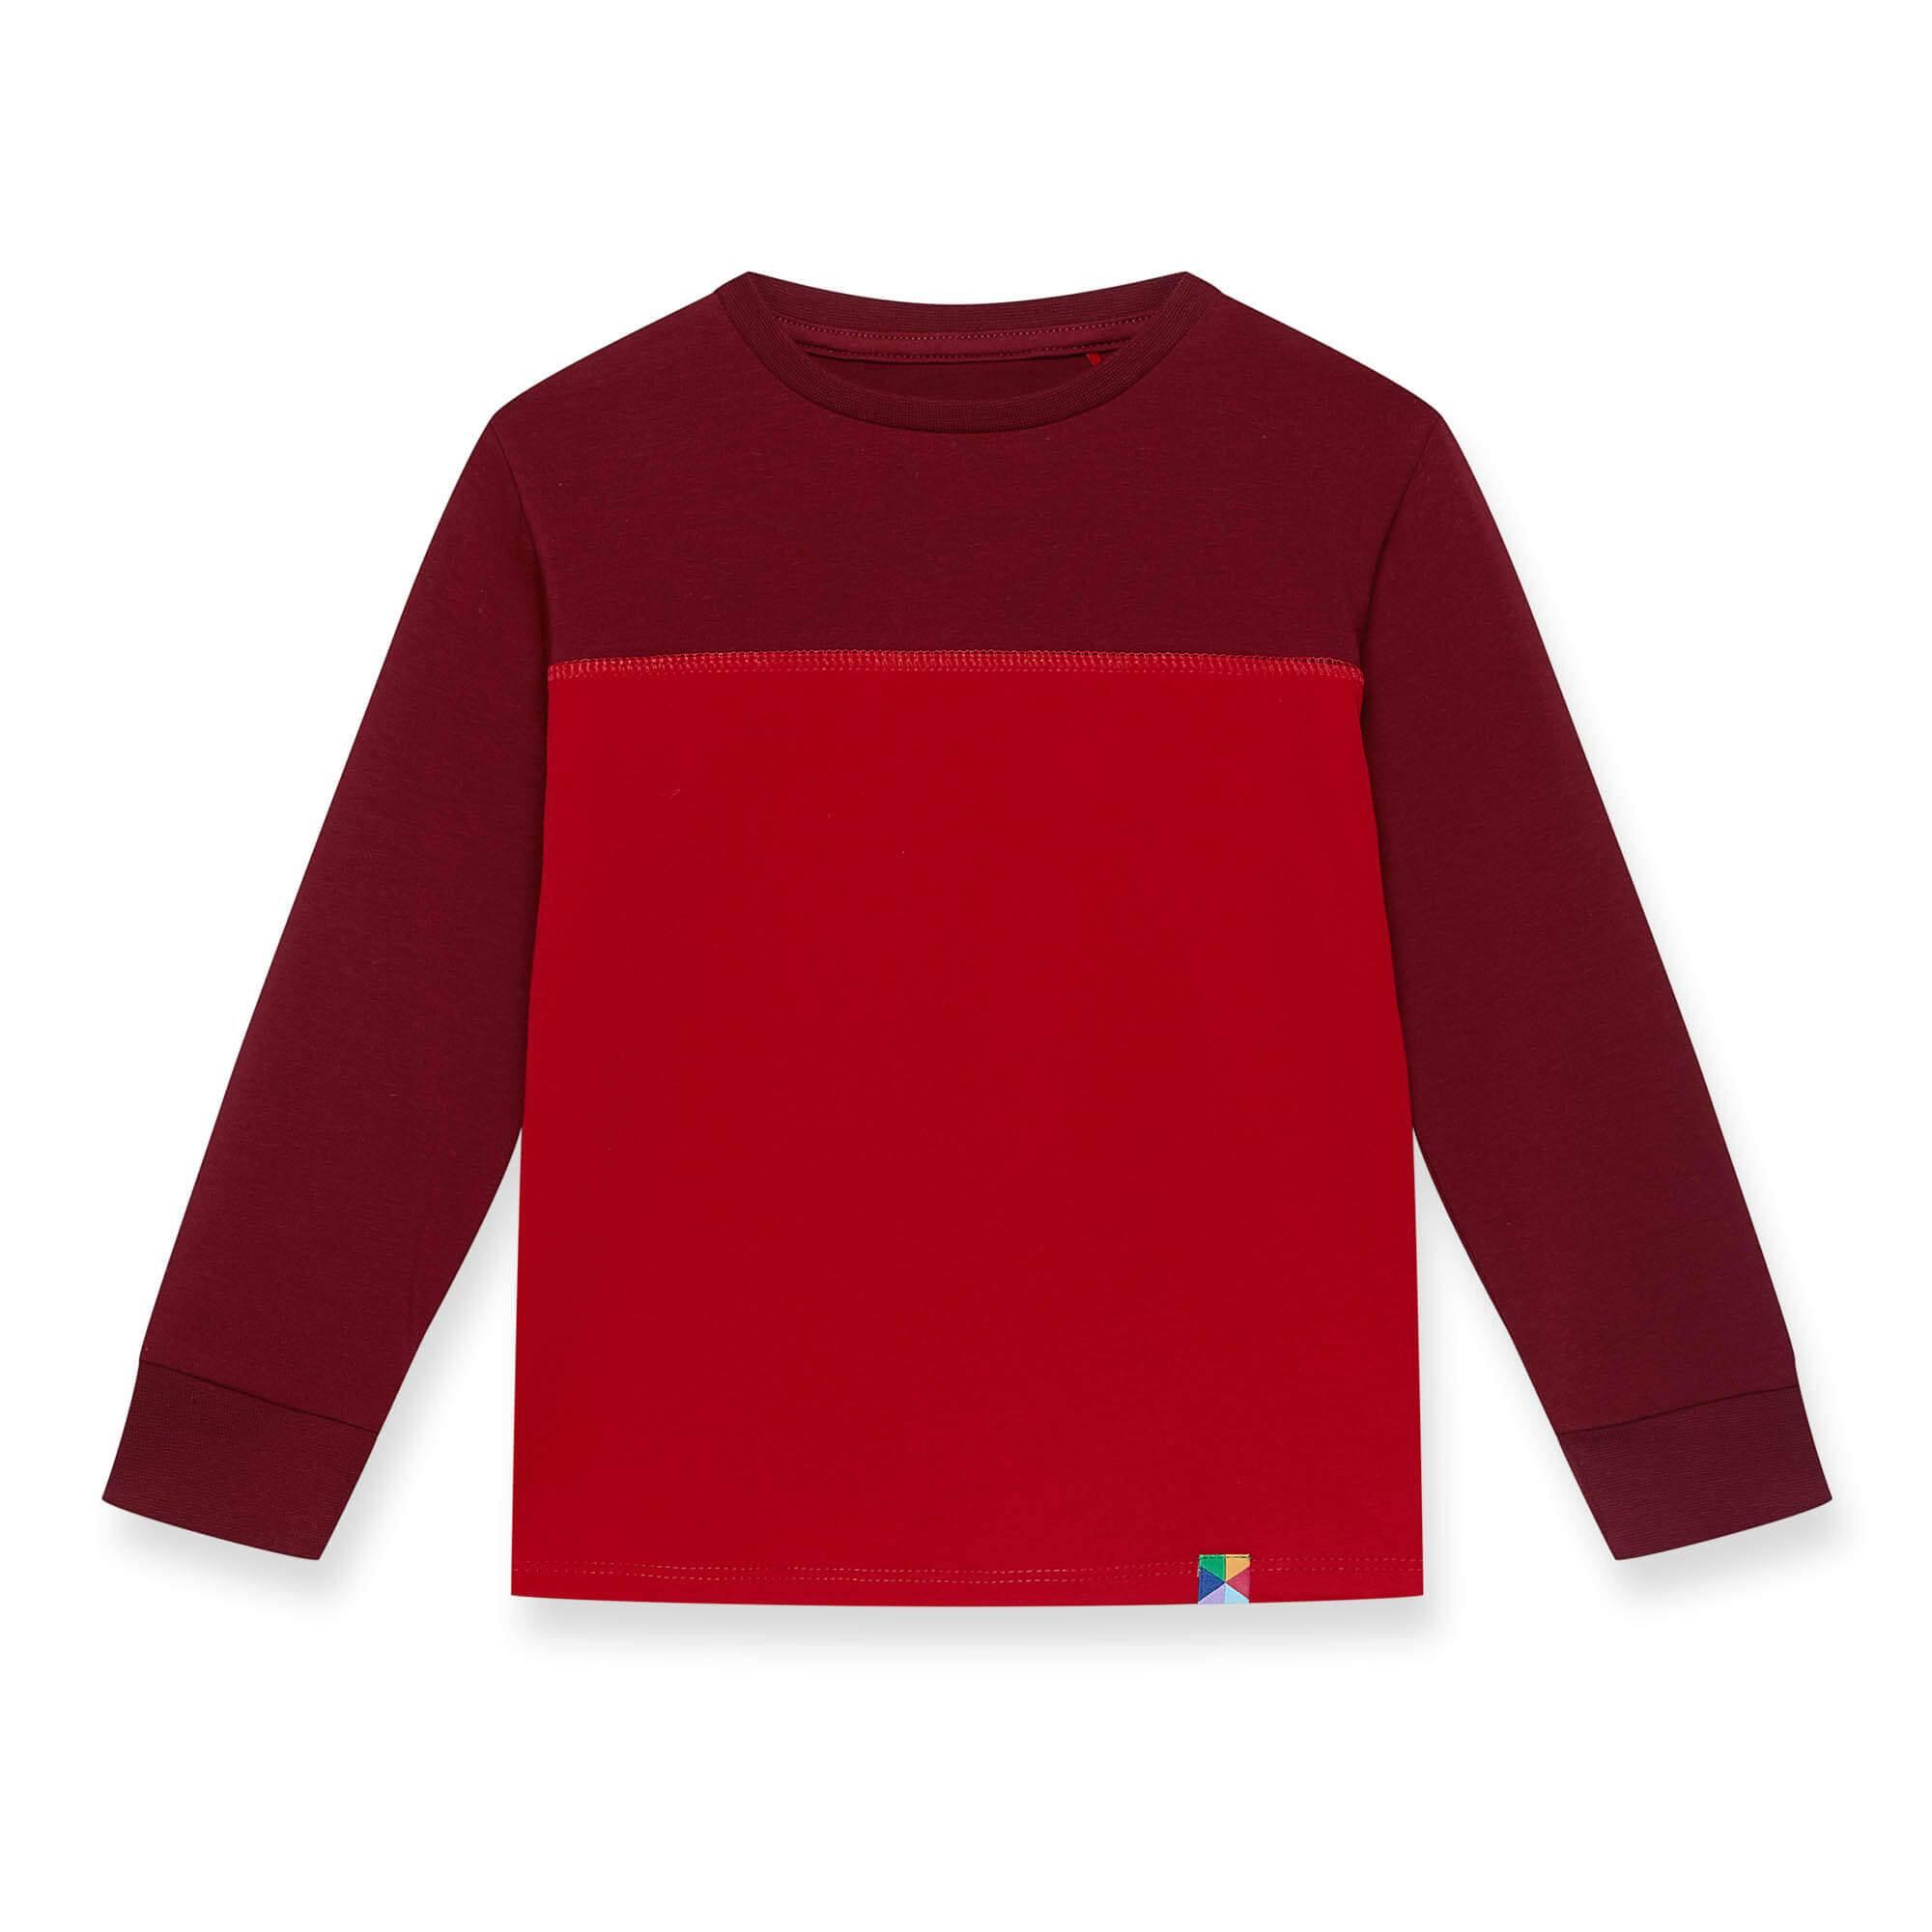 Bordowo-czerwona bluzka dwukolorowa